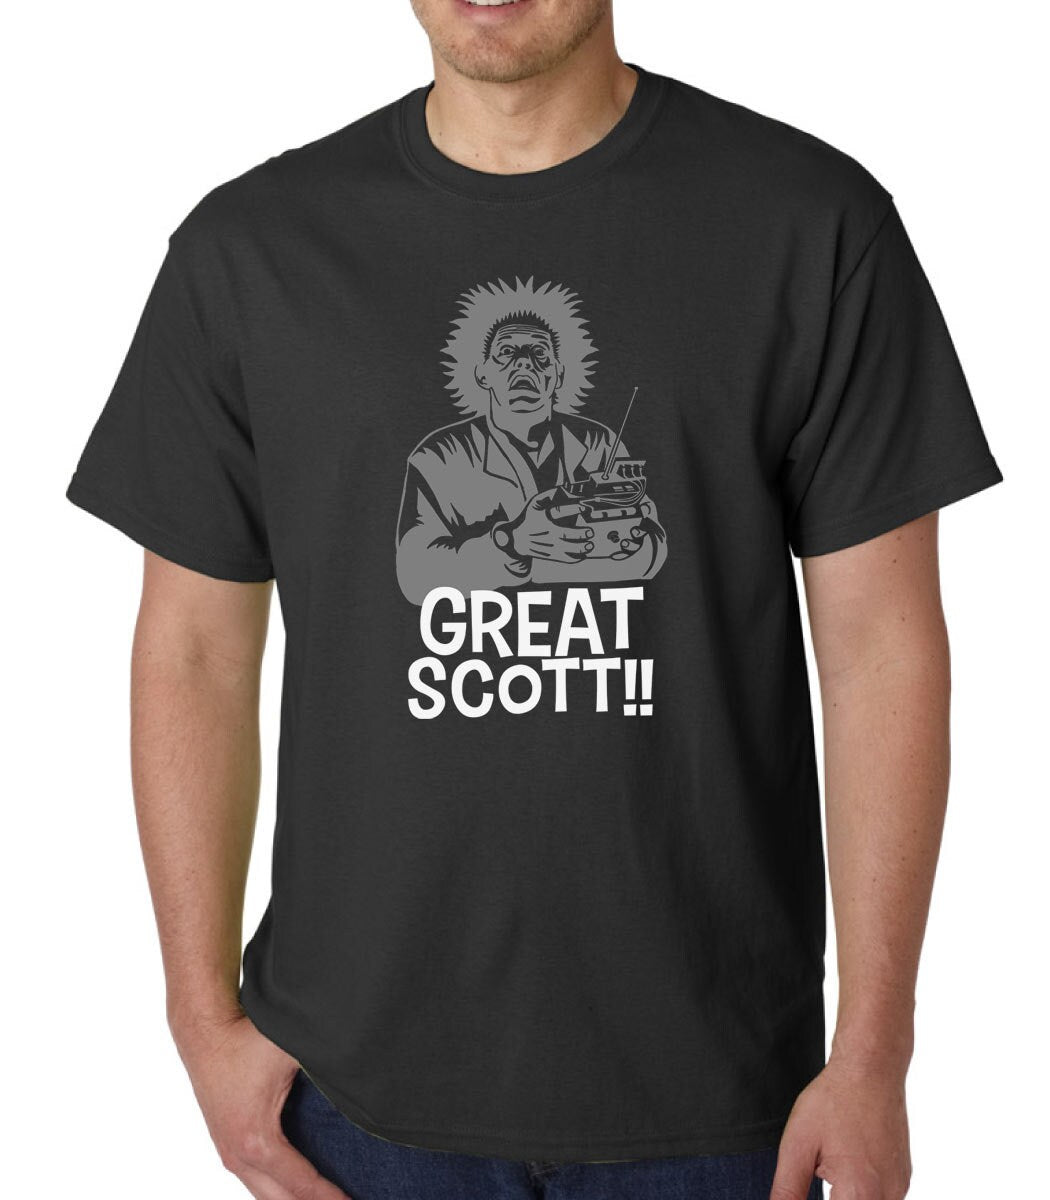 Great Scott!! t-shirt